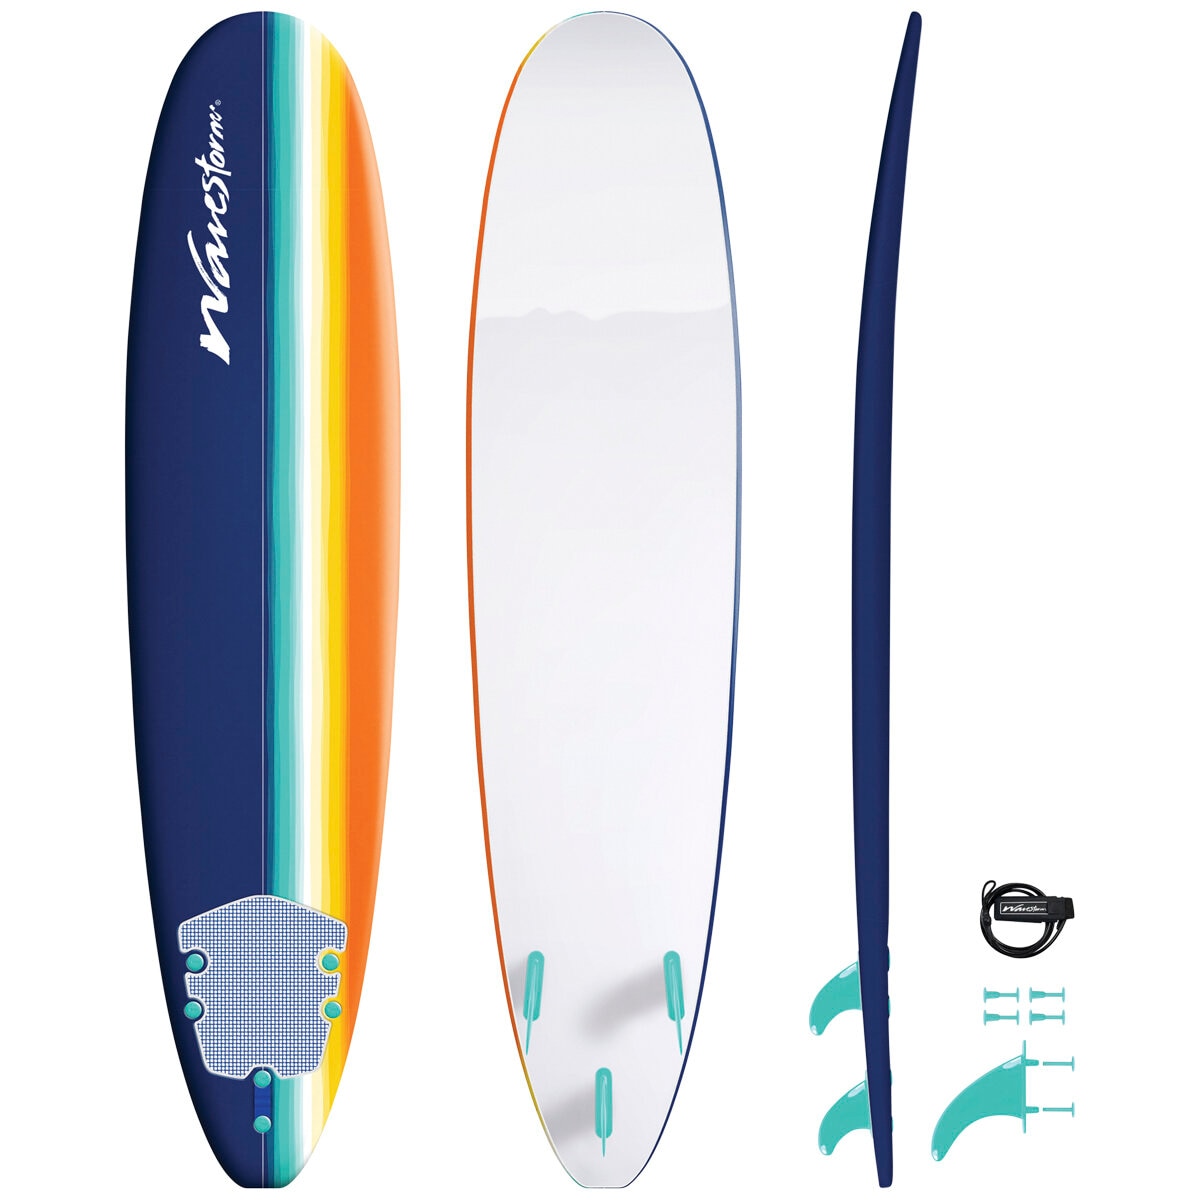 Wavestorm Classic Surfboard 2.4m Blue White Orange